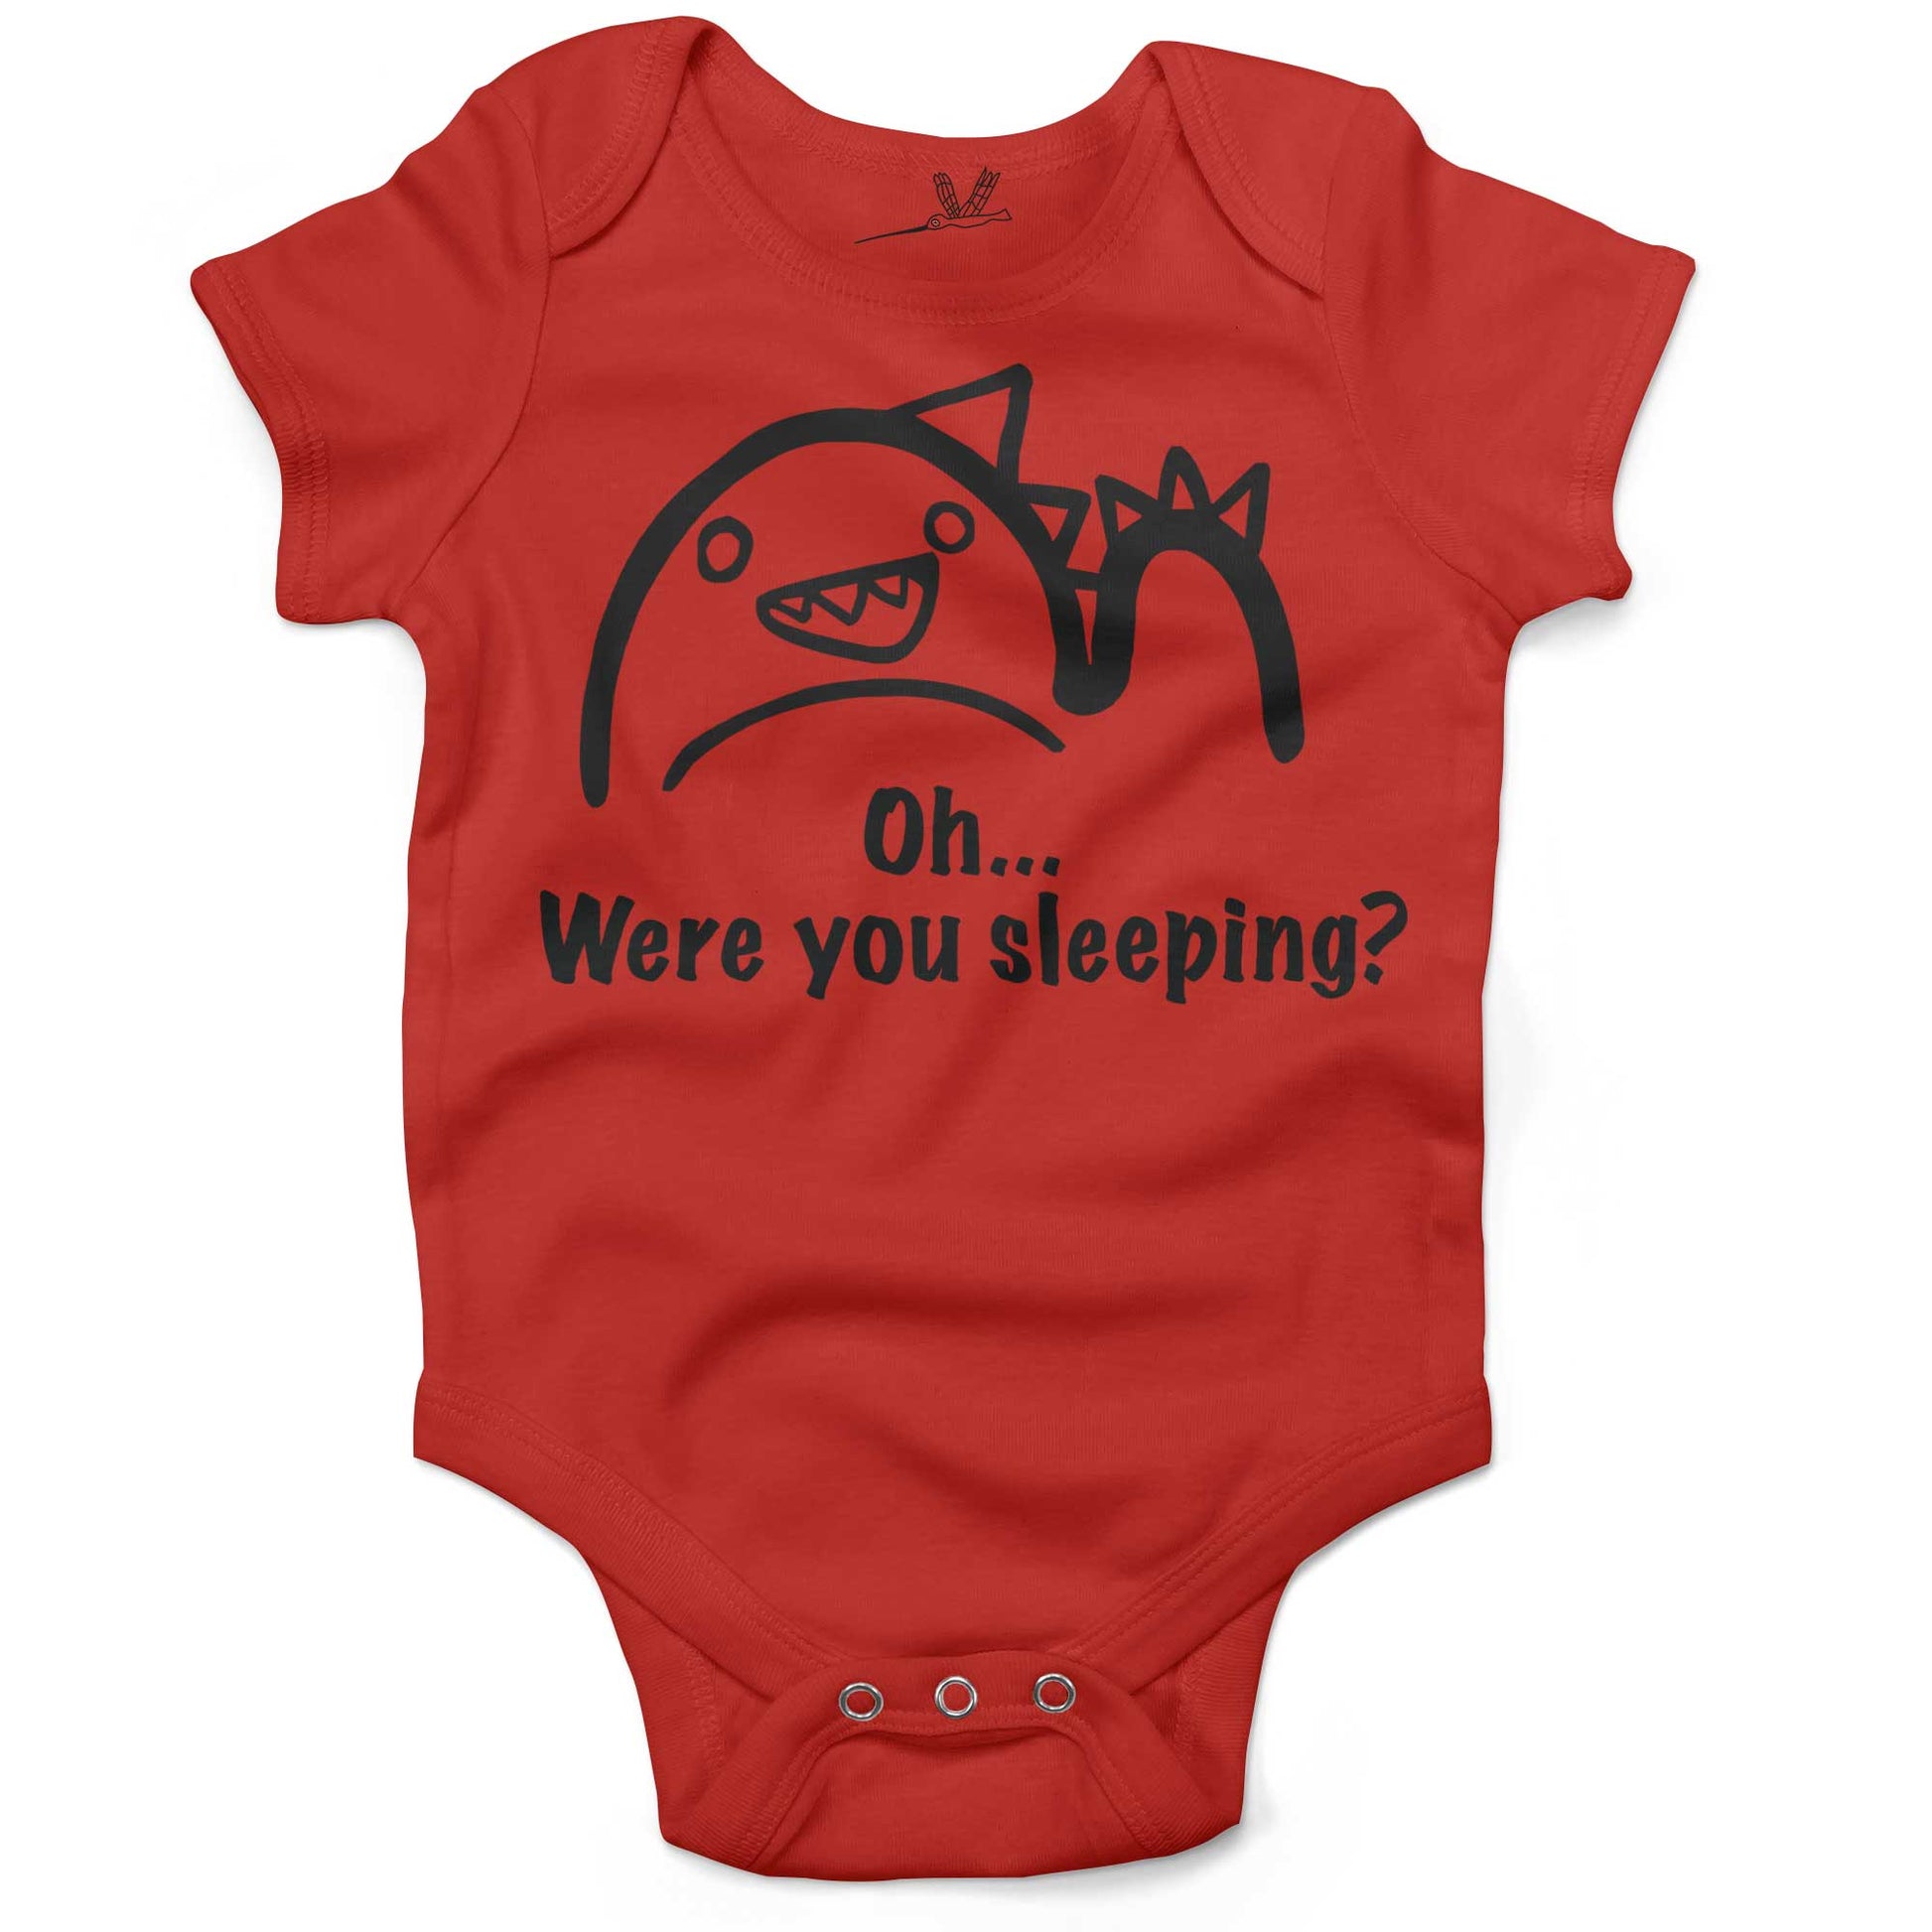 Oh...Were you sleeping? Infant Bodysuit or Raglan Baby Tee-Organic Red-3-6 months